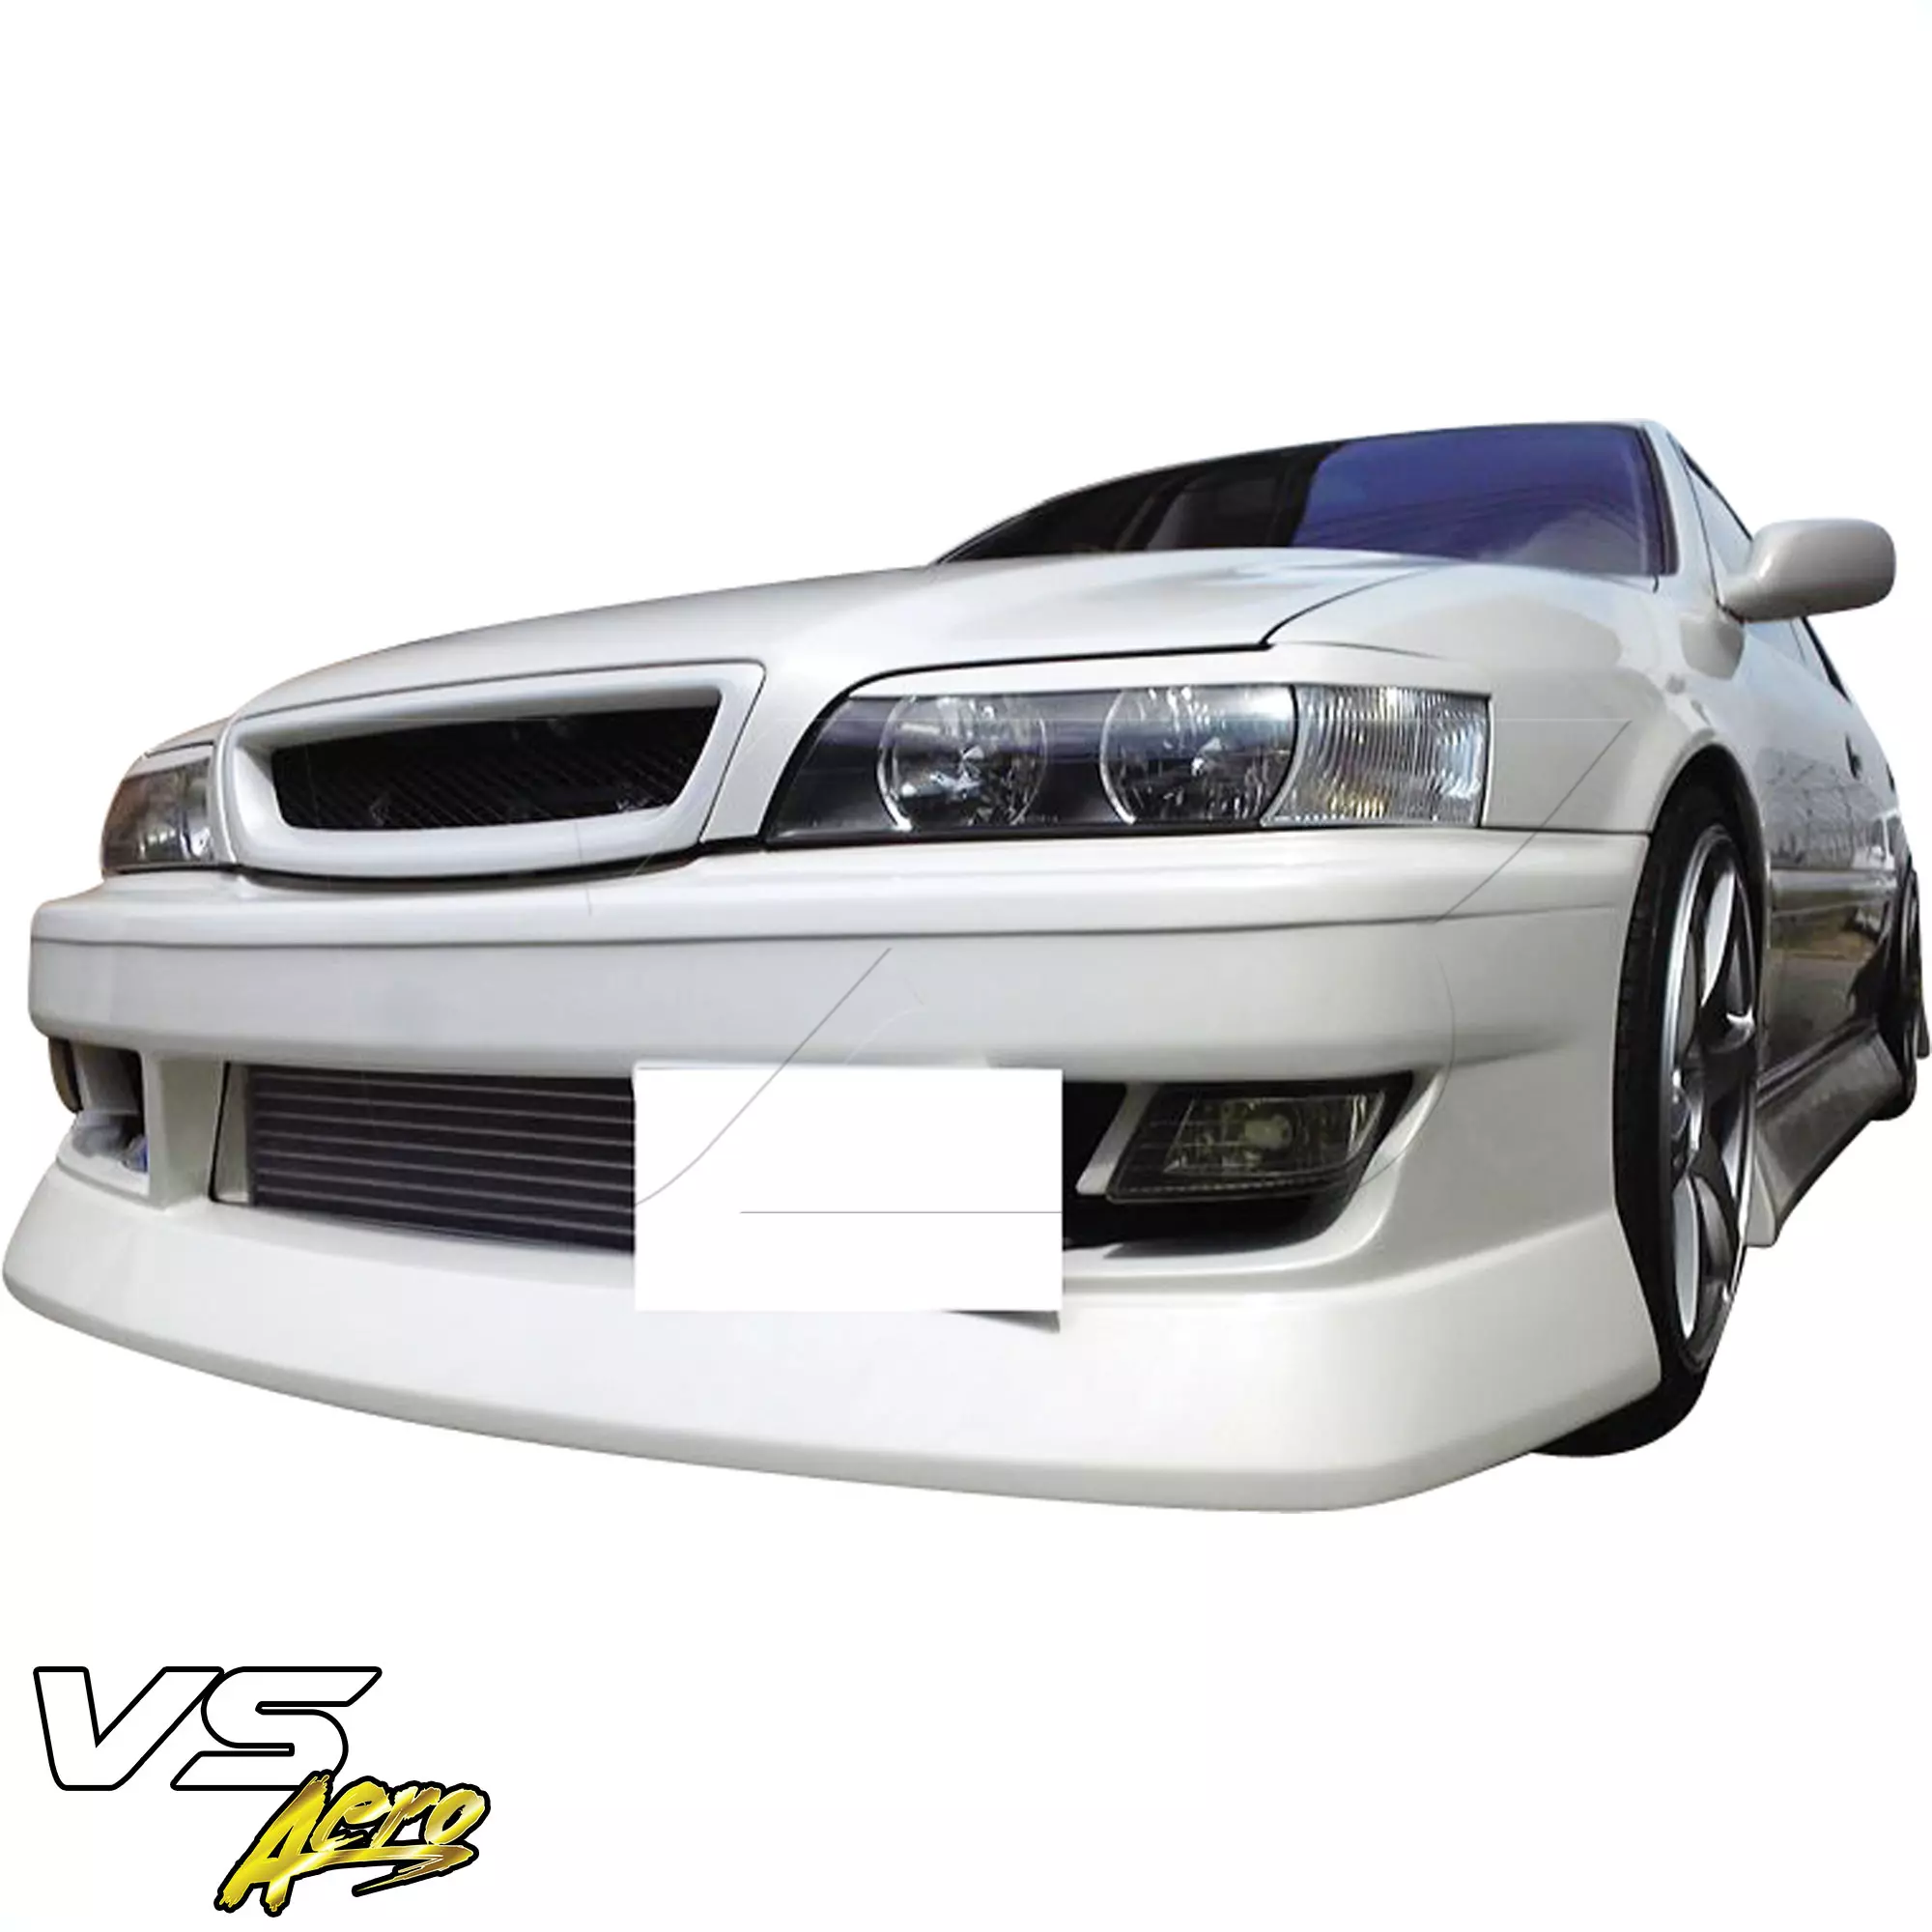 VSaero FRP BSPO Body Kit 4pc > Toyota Chaser JZX100 1996-2000 - Image 7